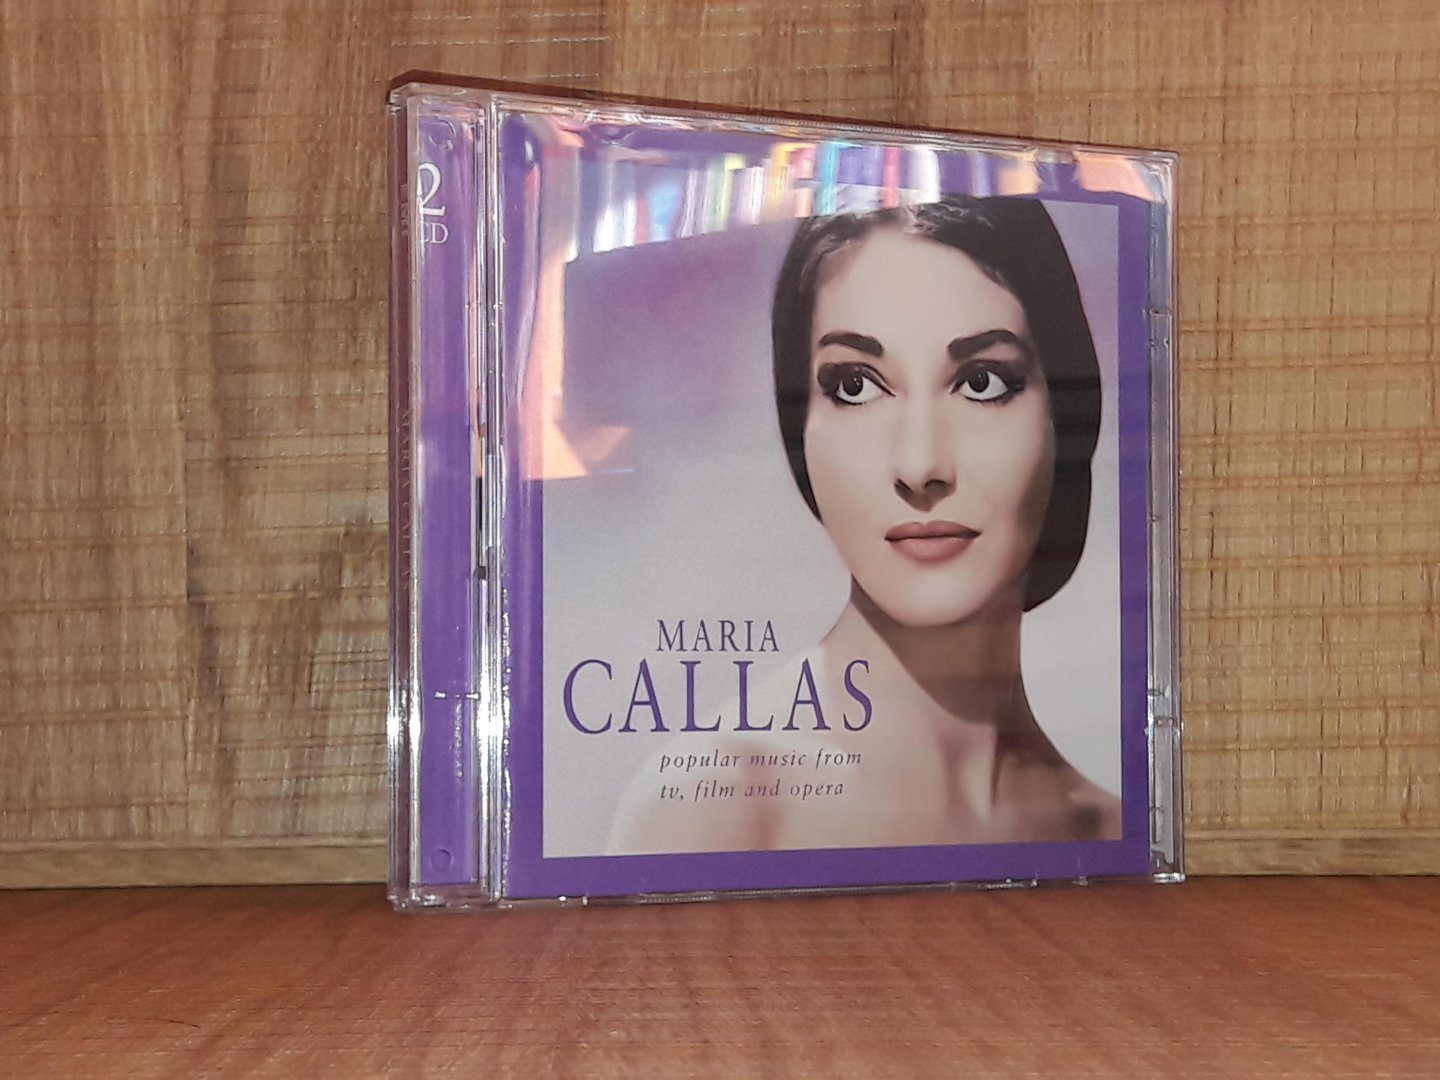 Callas, Maria - Maria Callas. Popular music from tv, film and opera